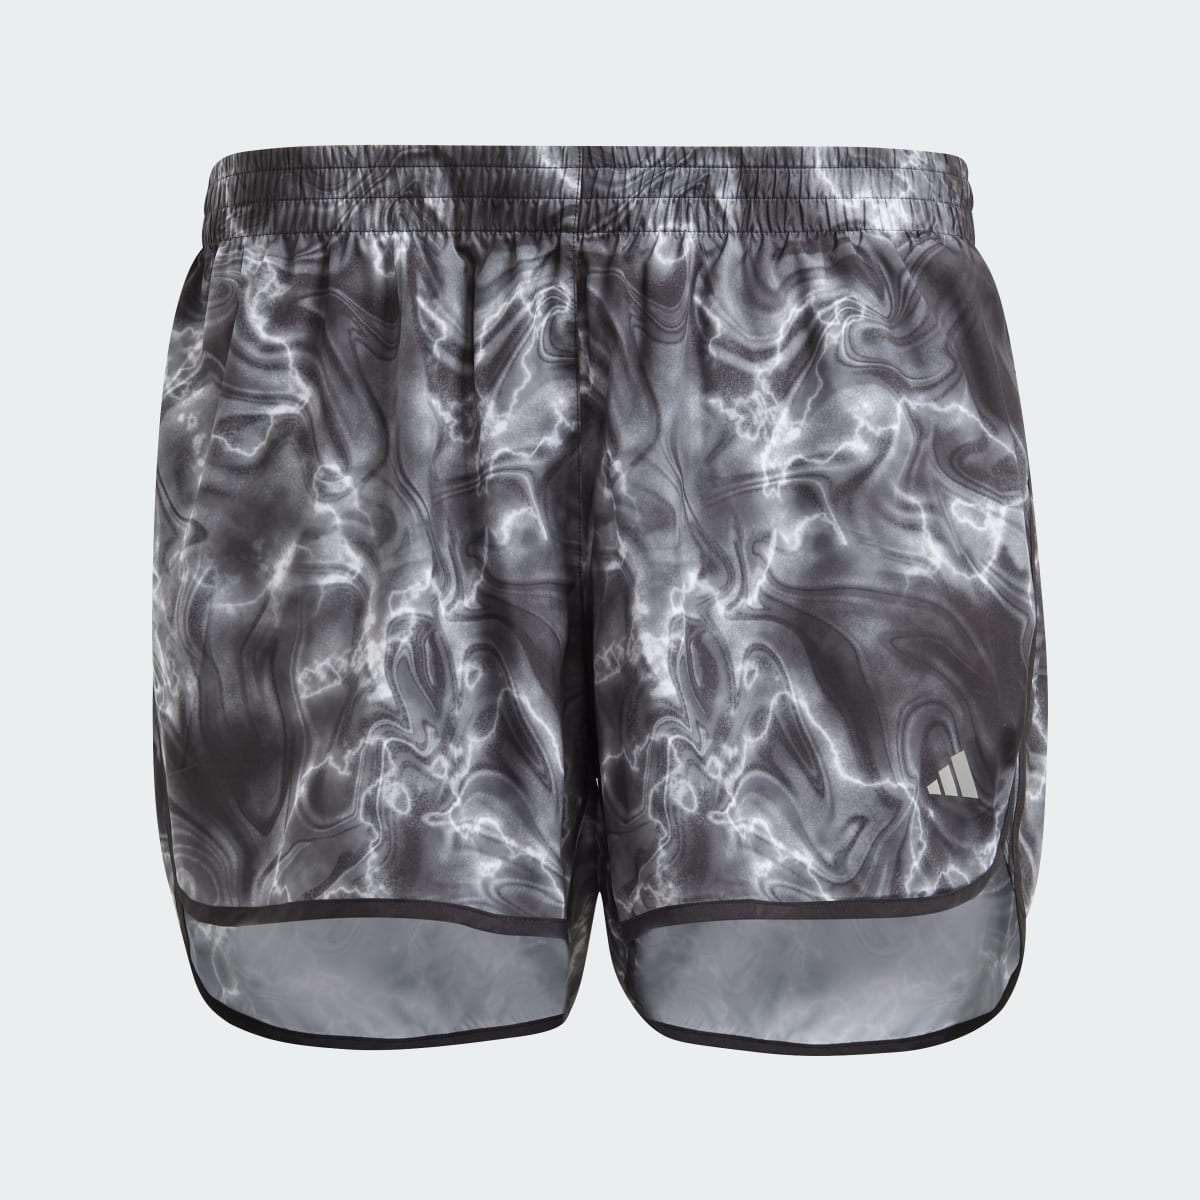 Adidas Marathon 20 Allover Print Shorts (Plus Size). 4